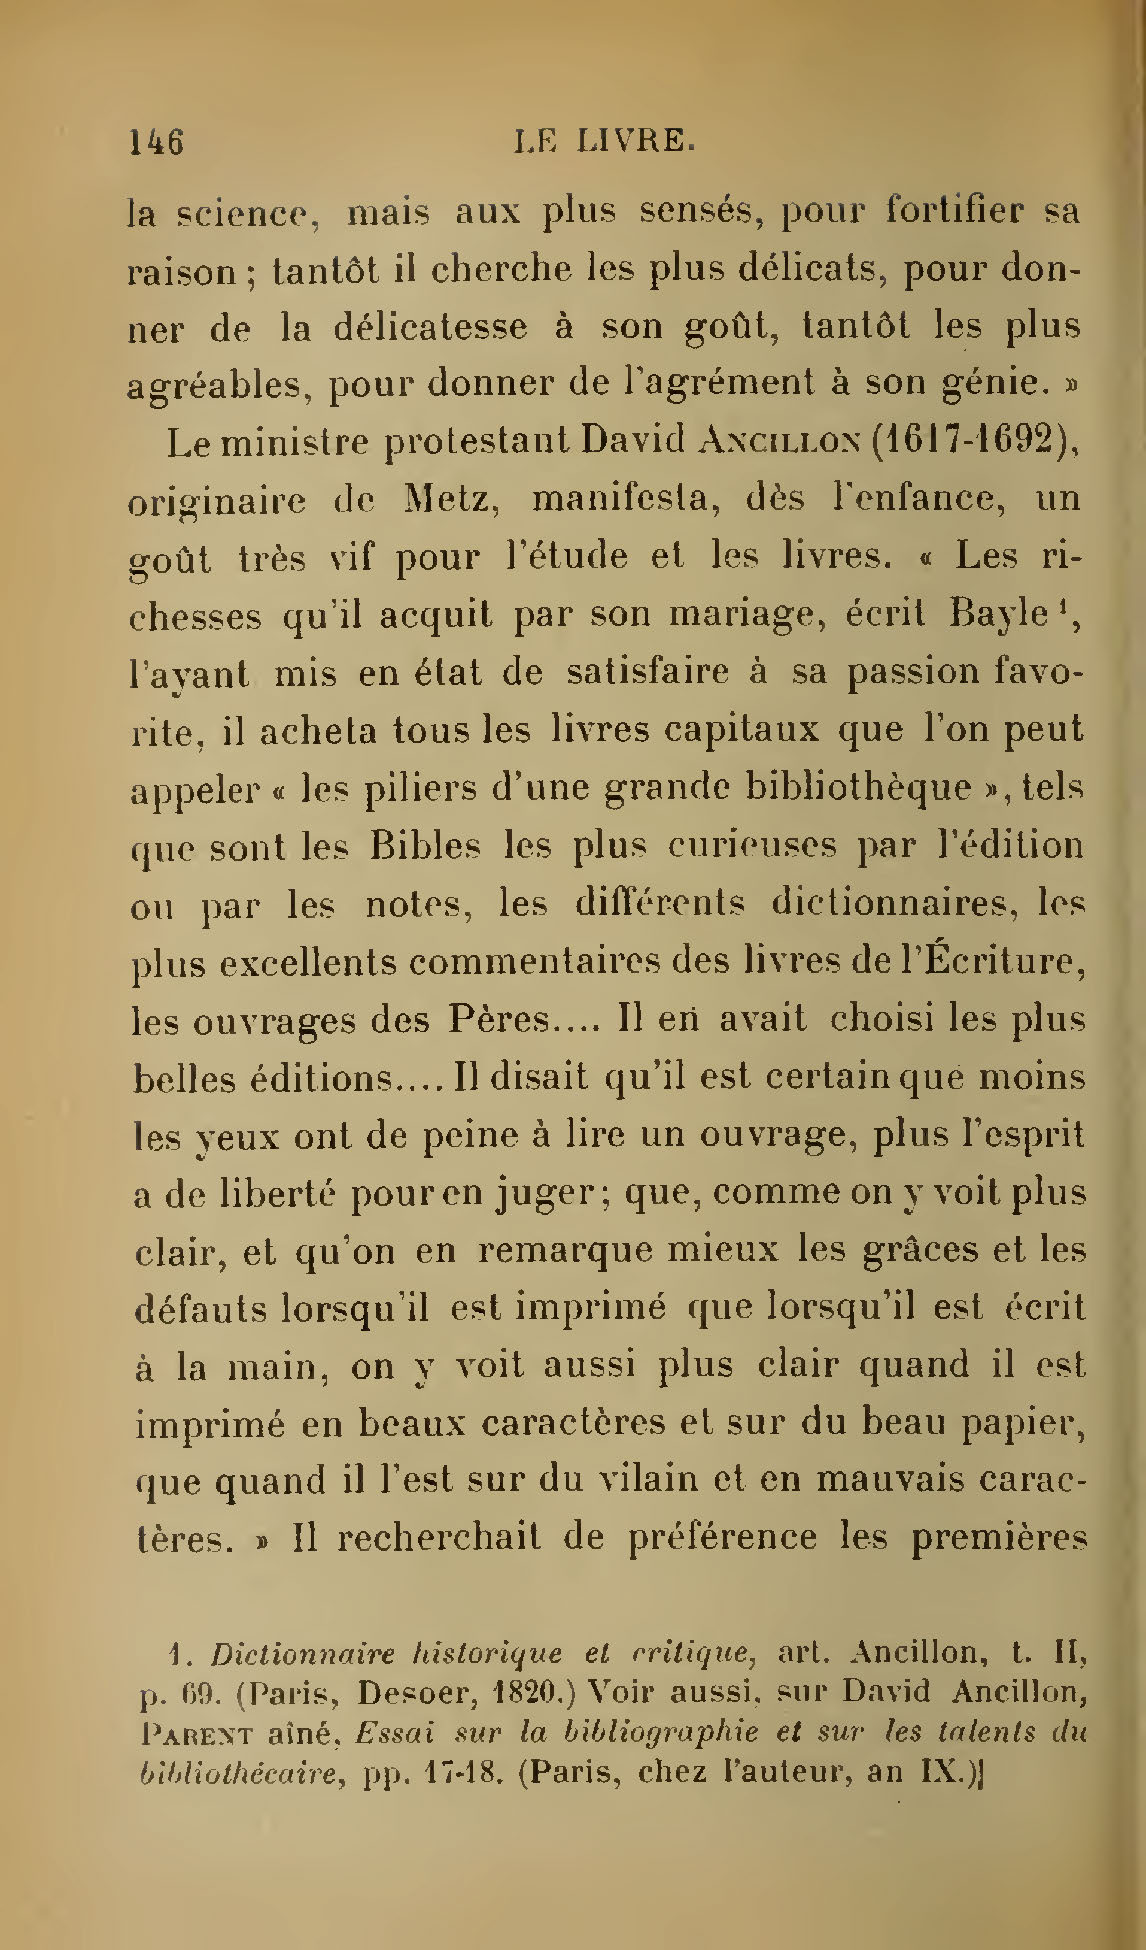 Albert Cim, Le Livre, t. I, p. 146.